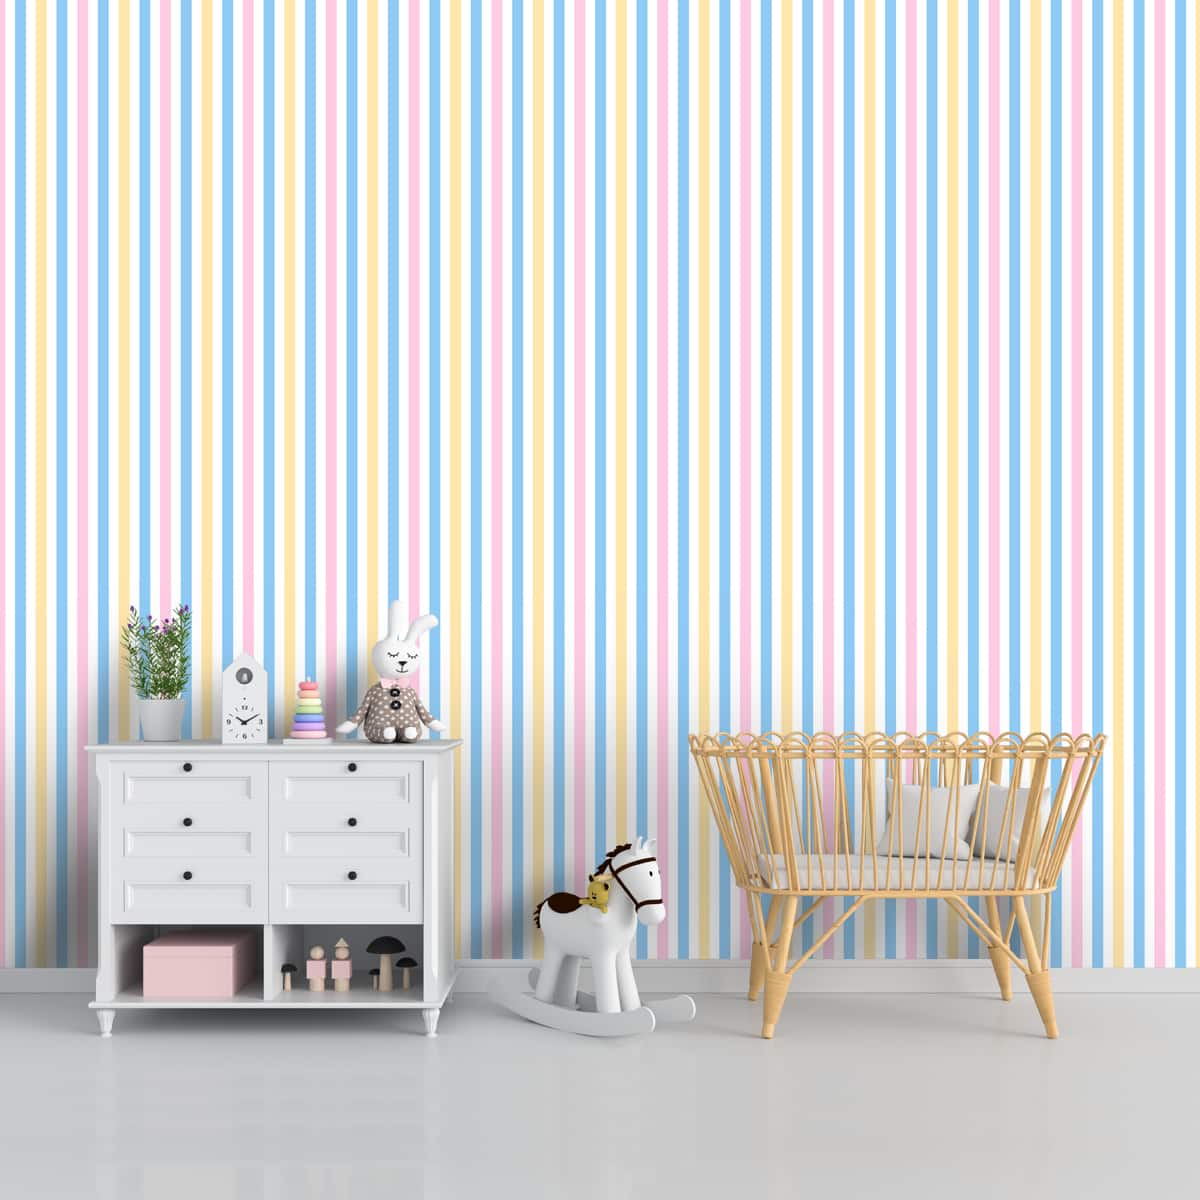 Horizontal Multicolor Strips Pattern Wallpaper for Kids Room, Customised Design